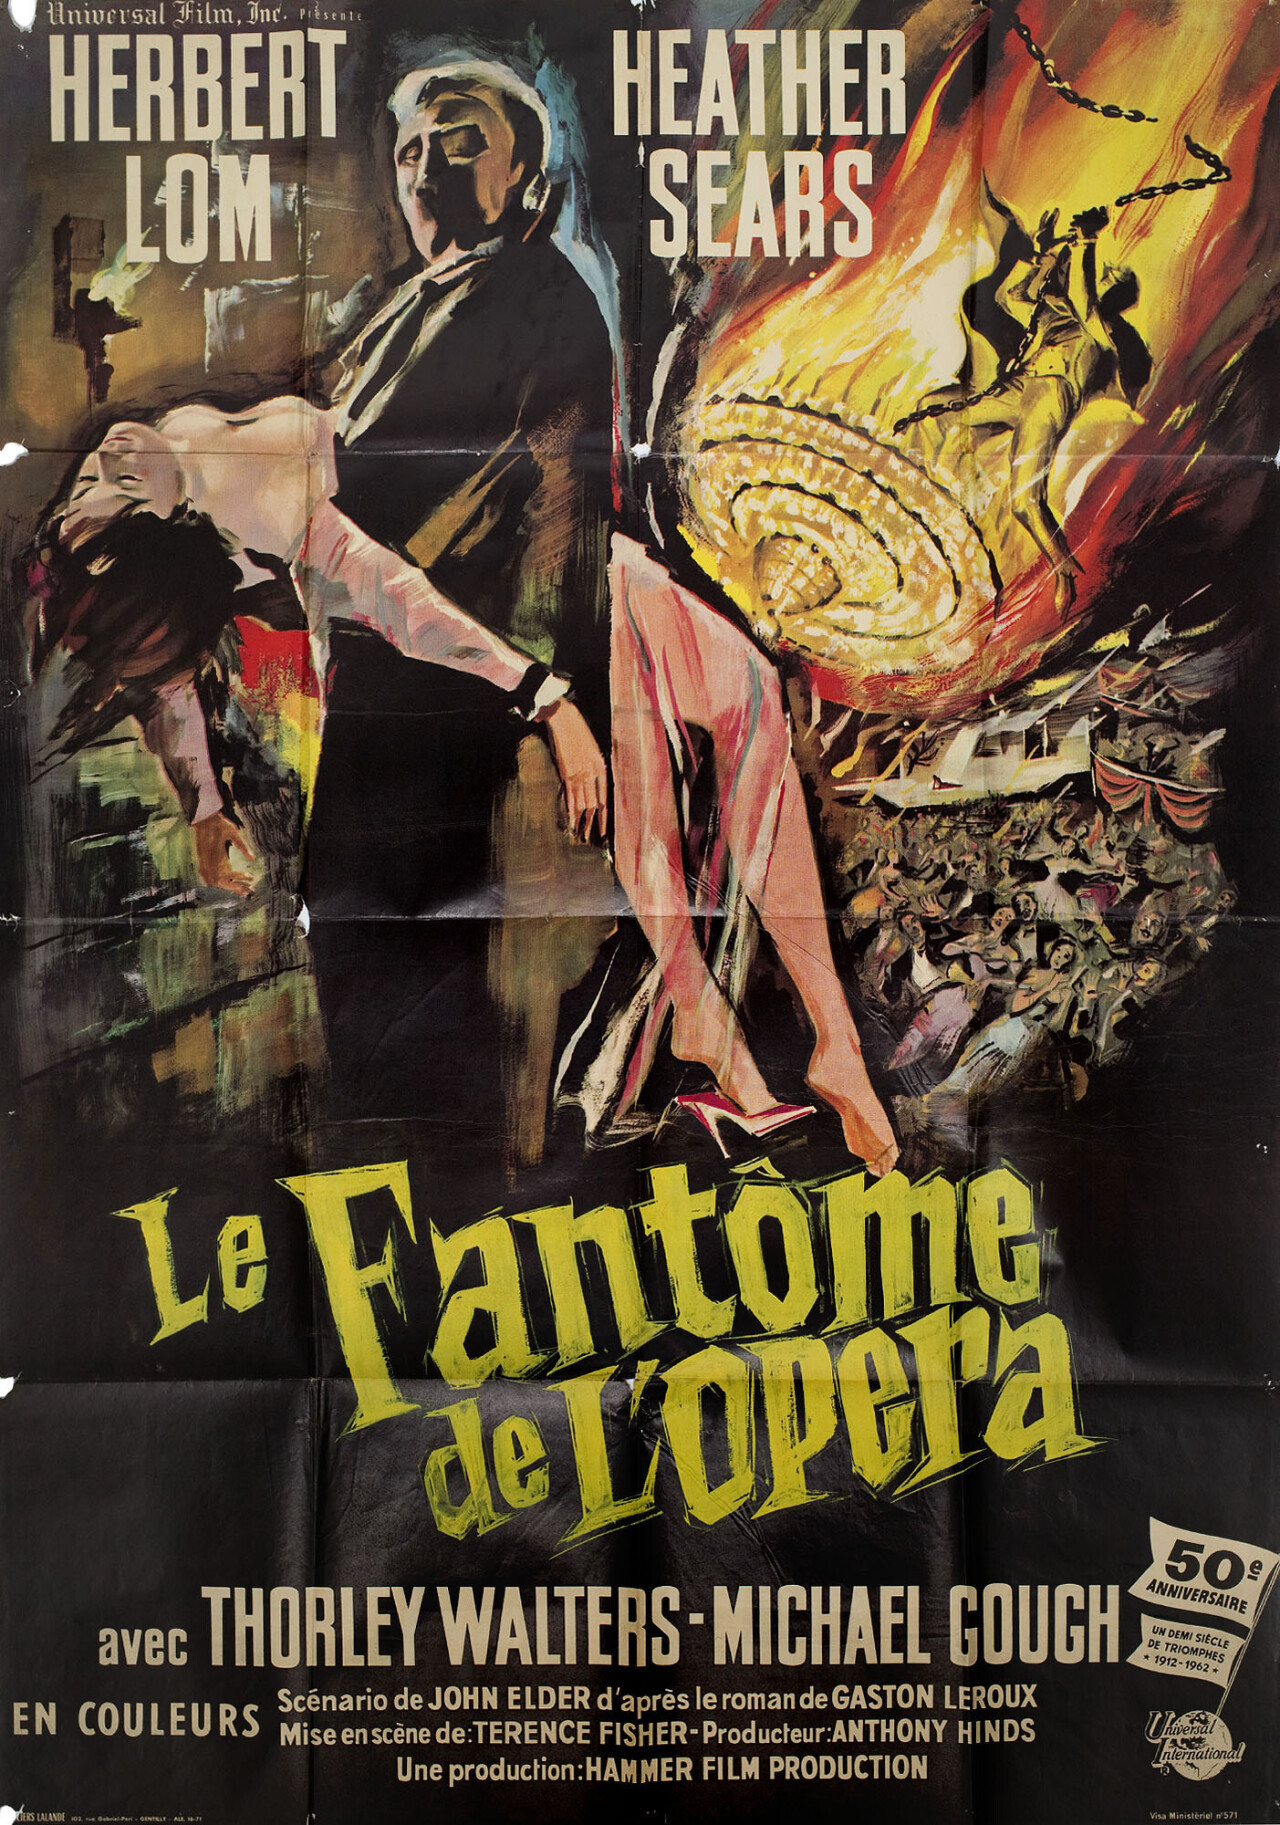 Призрак оперы (The Phantom of the Opera, 1962), режиссёр Теренс Фишер, французский постер к фильму, автор Рейнольд Браун (Hummer horror, 1962 год)